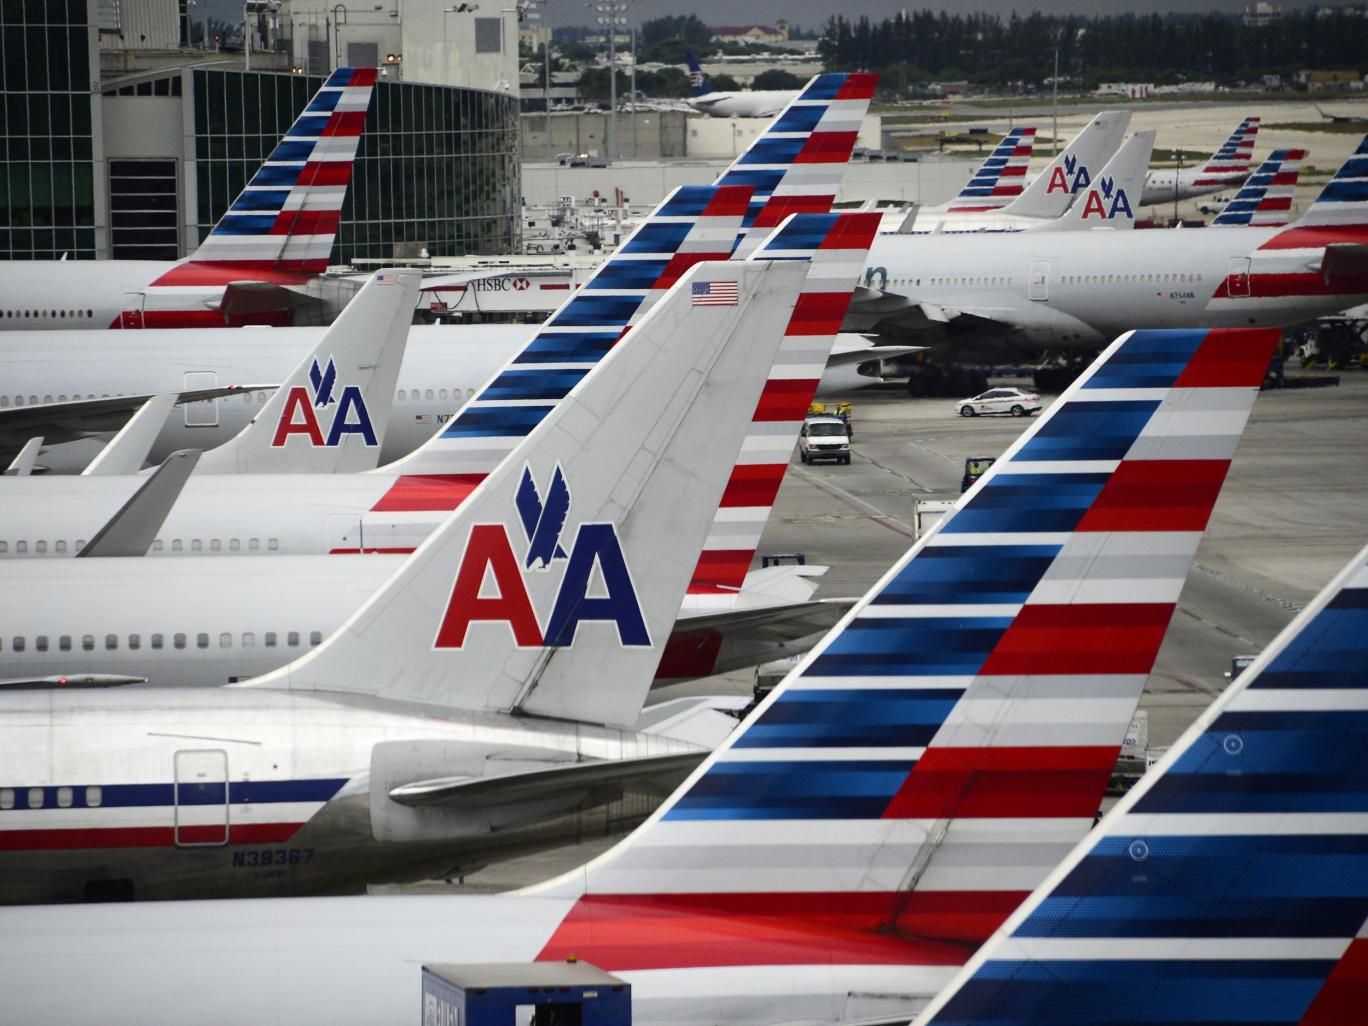 Muslim passenger kicked off American Airlines flight